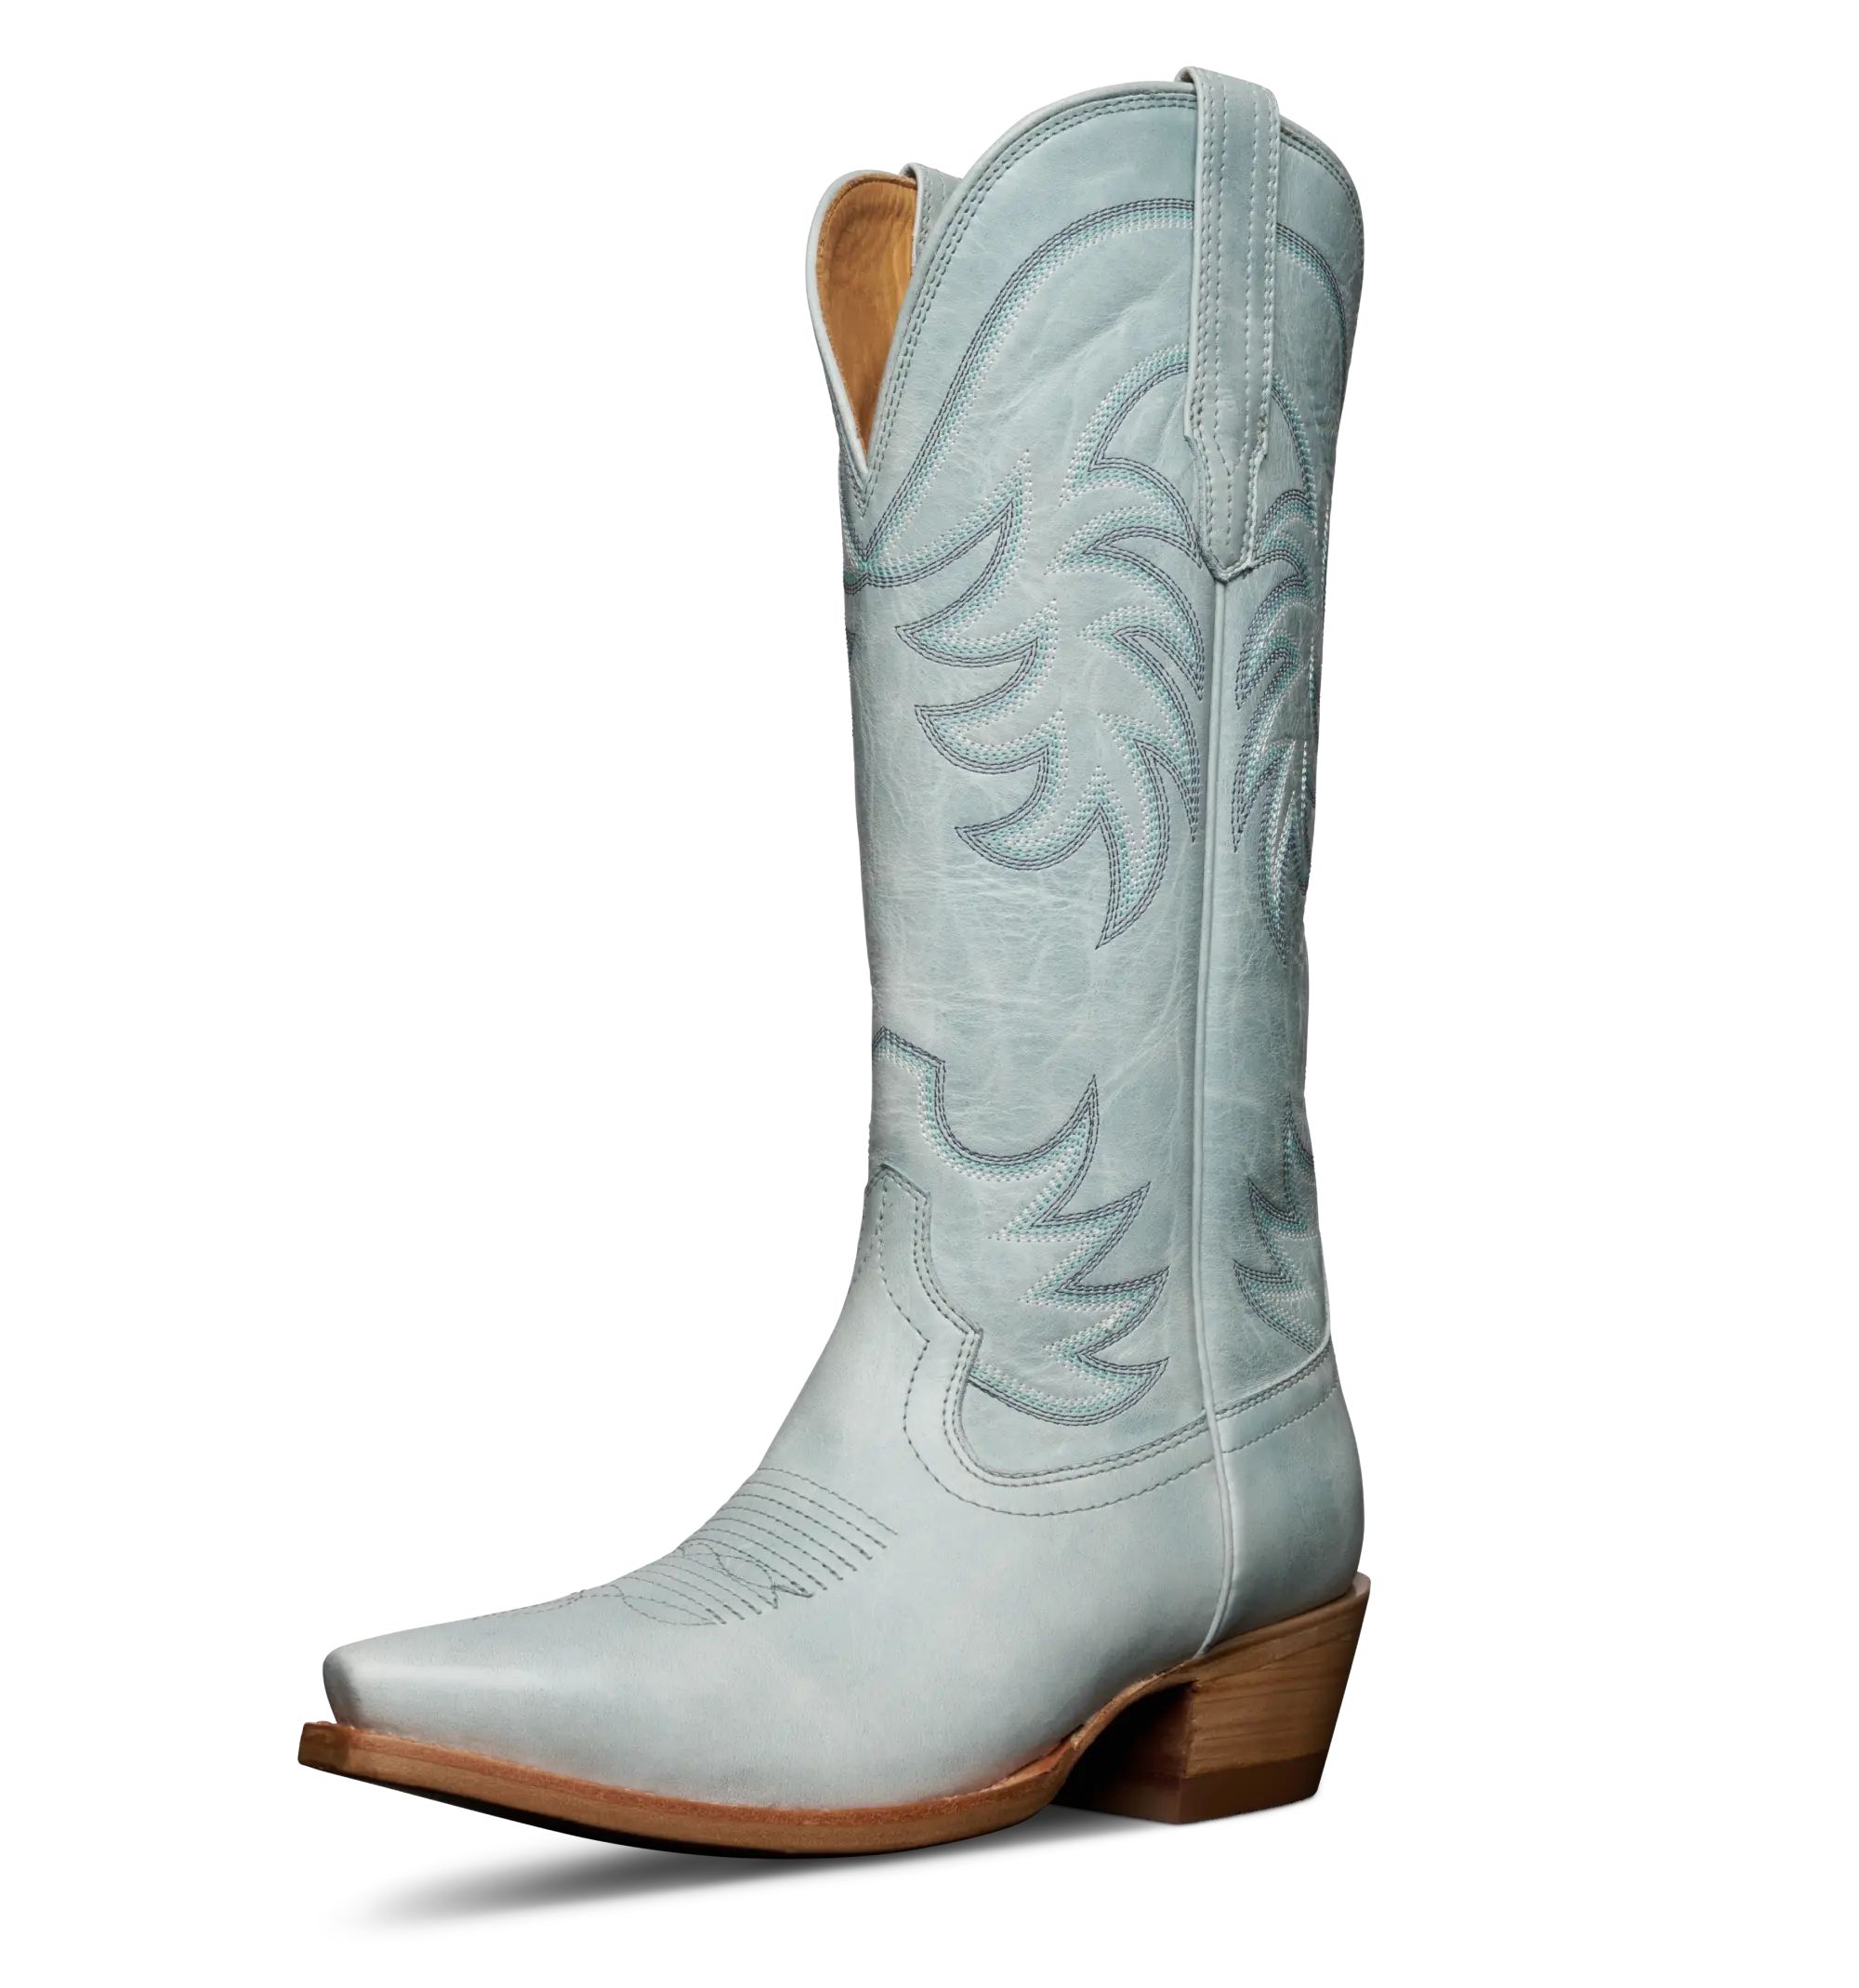 Women's Tall Cowgirl Boots |  The Annie - Slate Blue | Tecovas | Tecovas